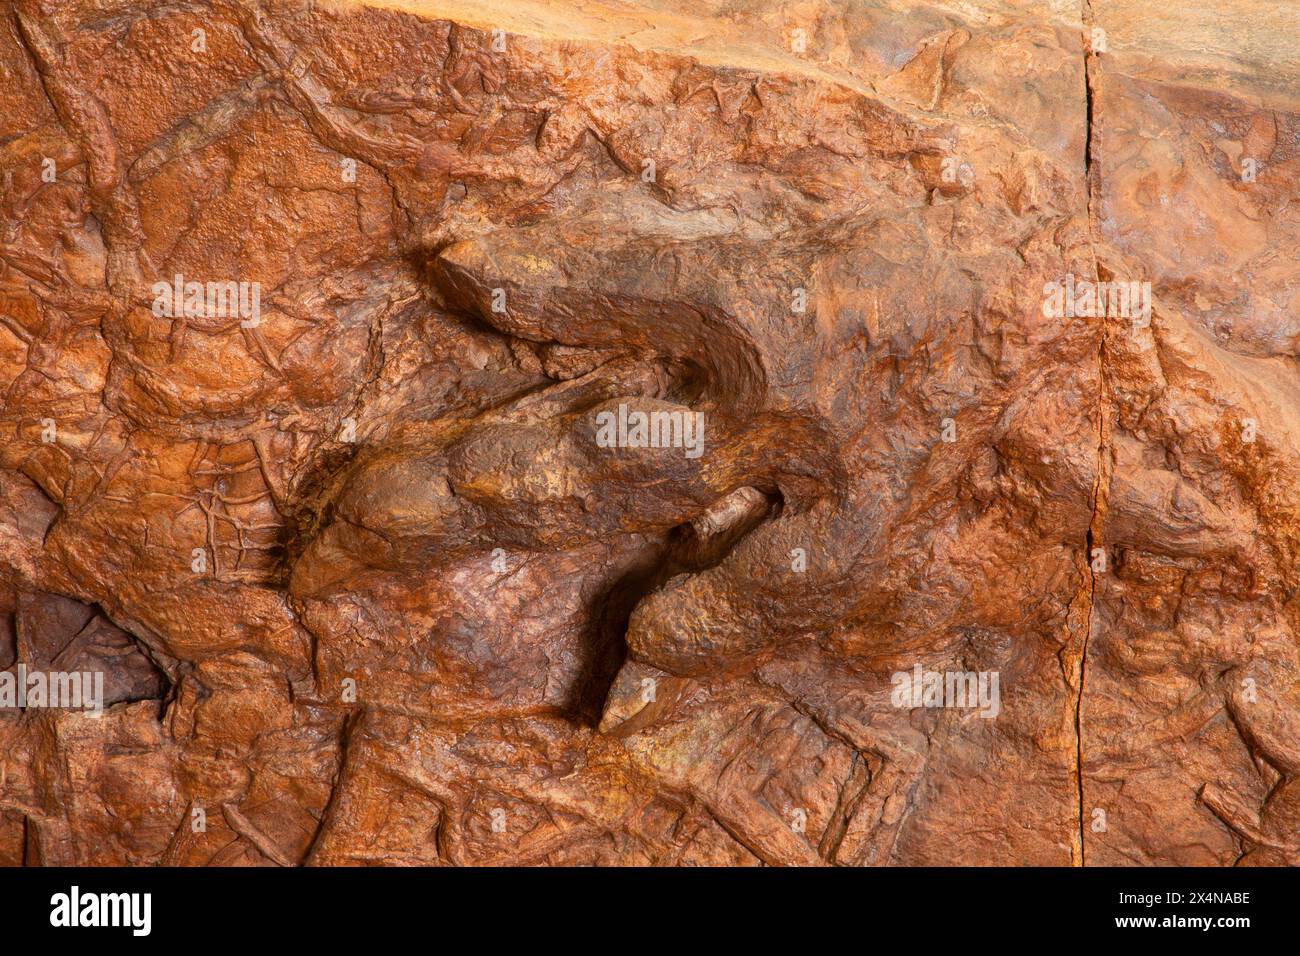 Eubrontes dinosaur track, St. George Dinosaur Discovery Site at Johnson Farm, St. George, Utah Stock Photo